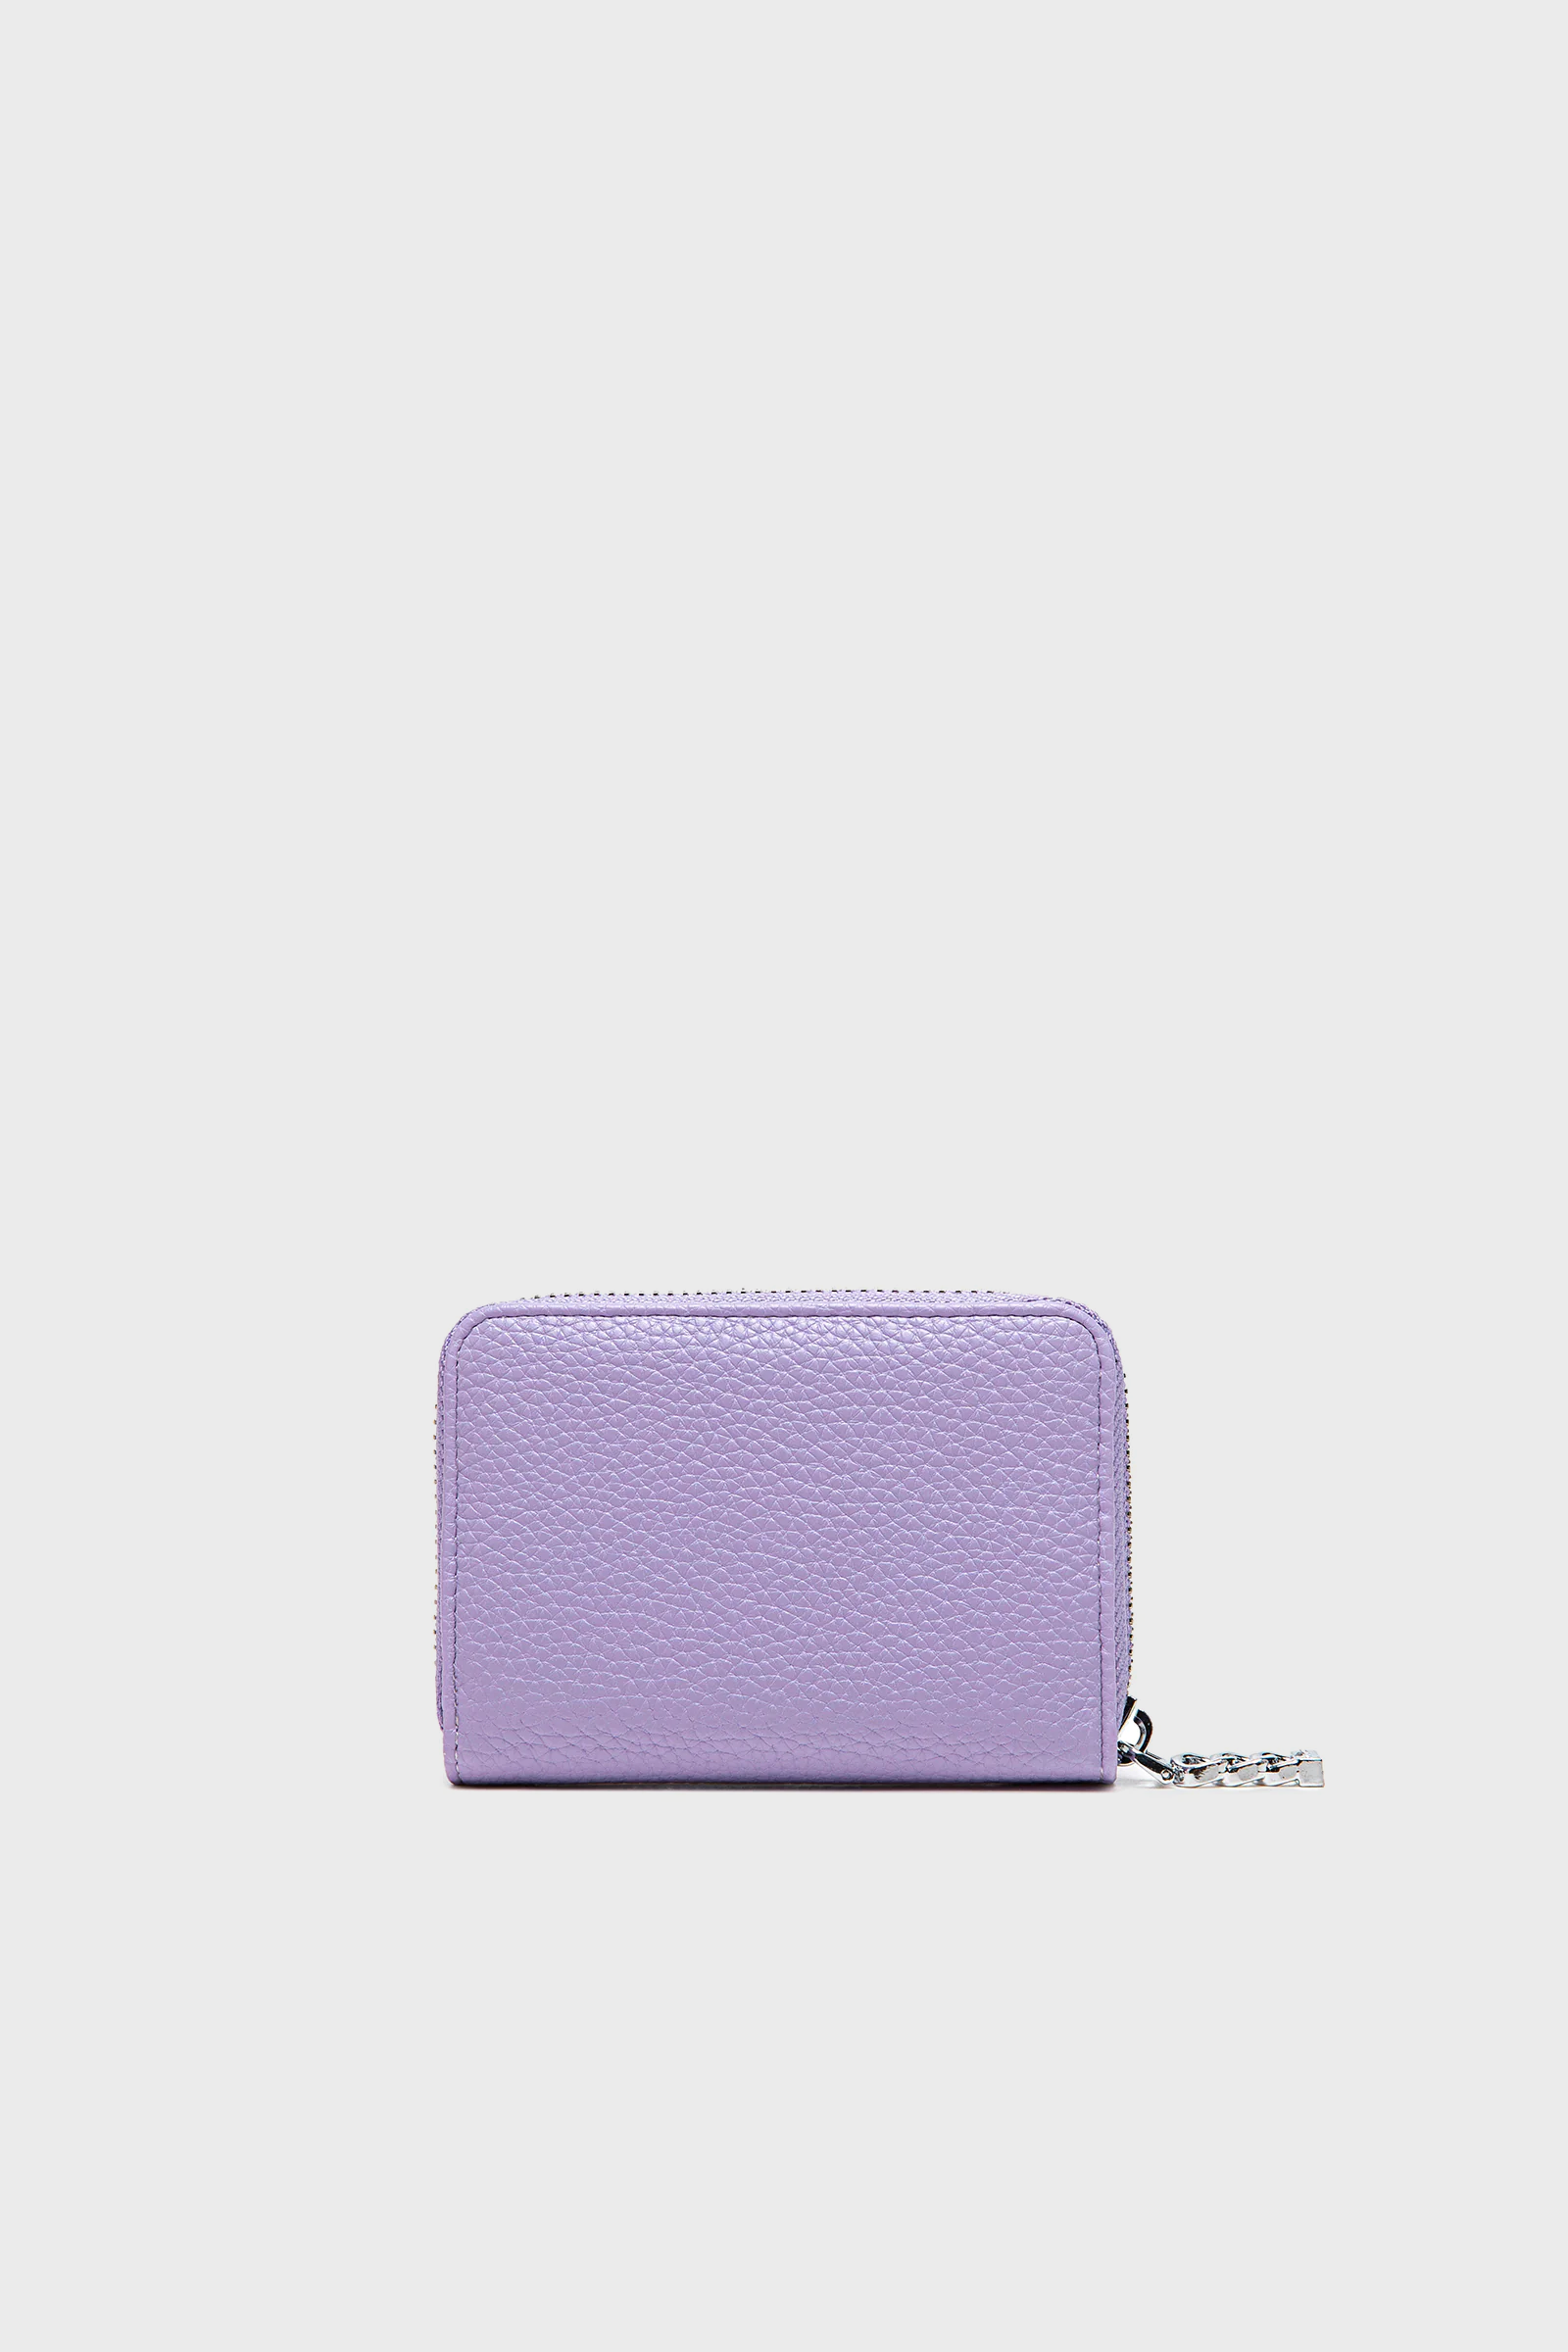 Kimi Card Wallet in Lavender Pebbled